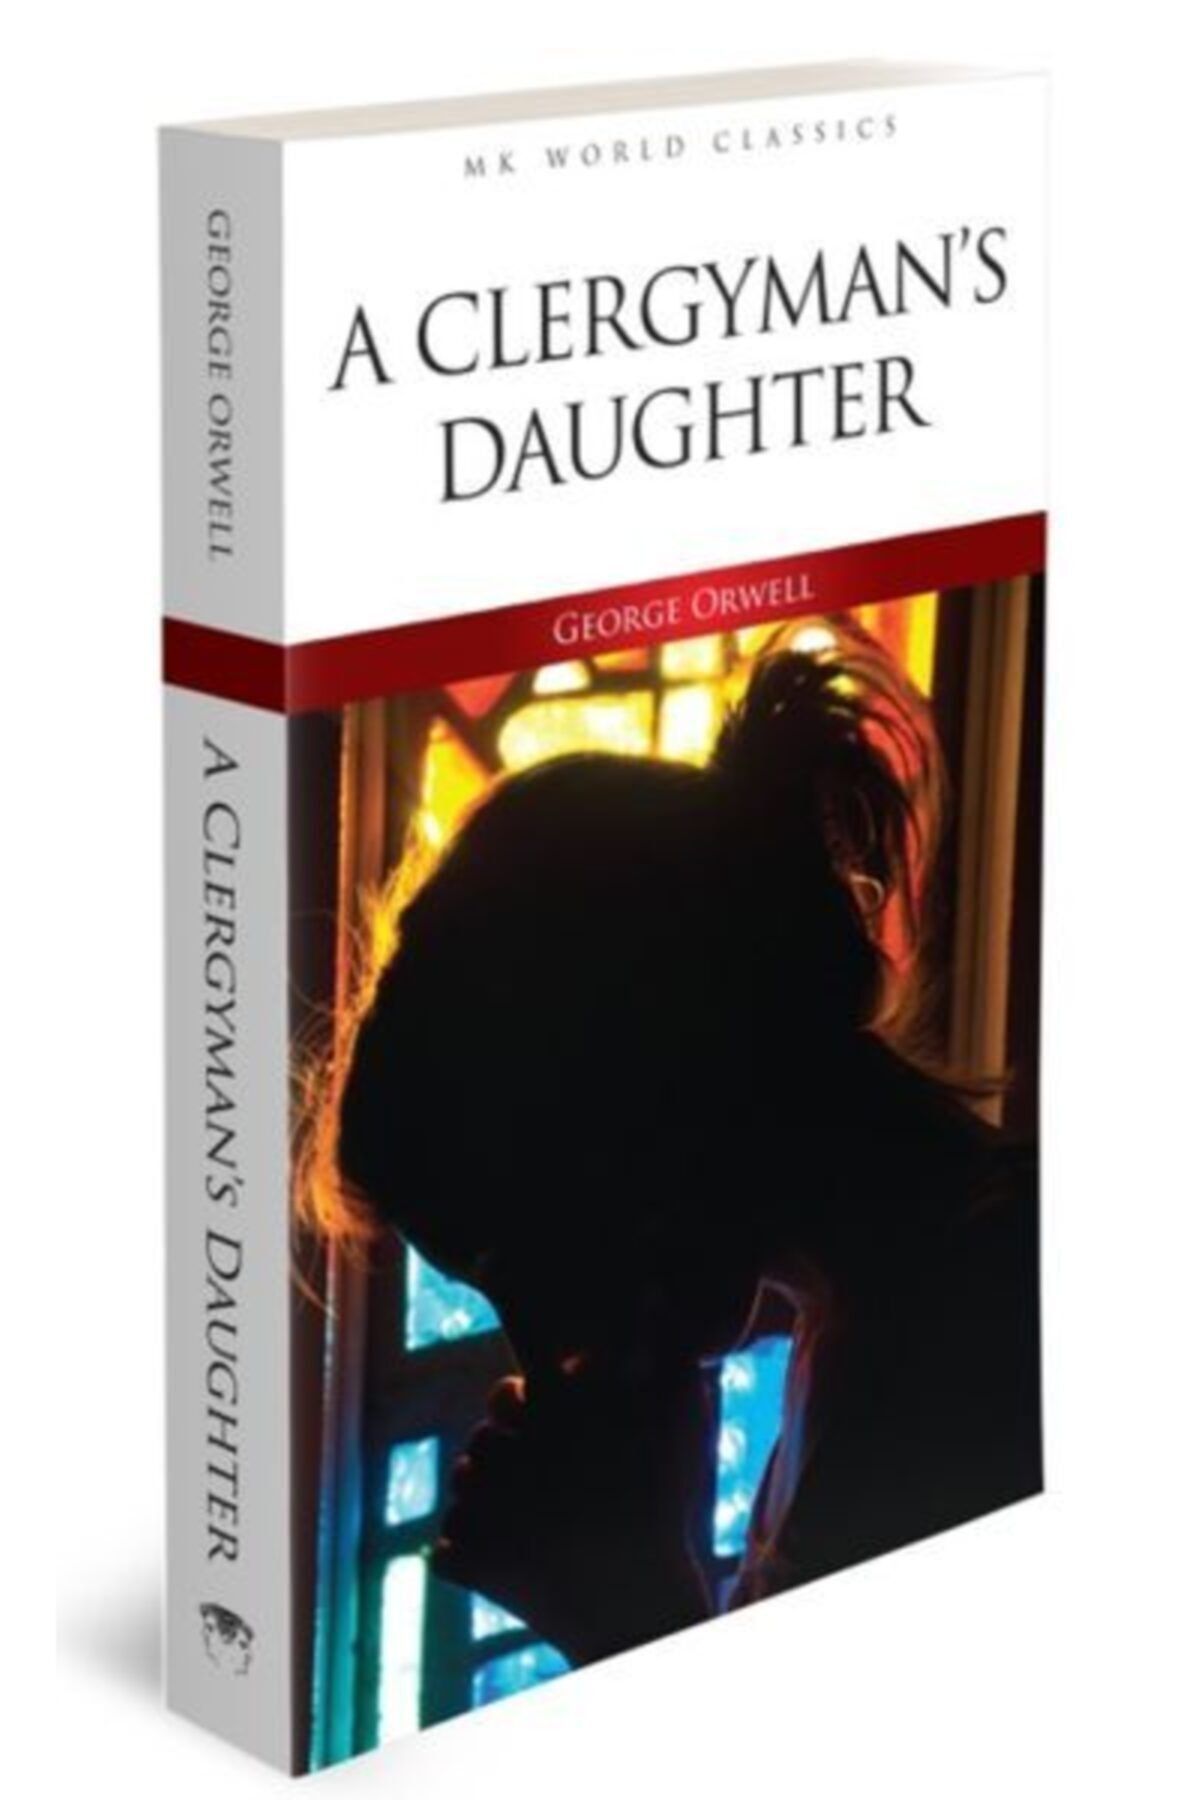 MK Publications A Clergyman's Daughter - Mk World Classics